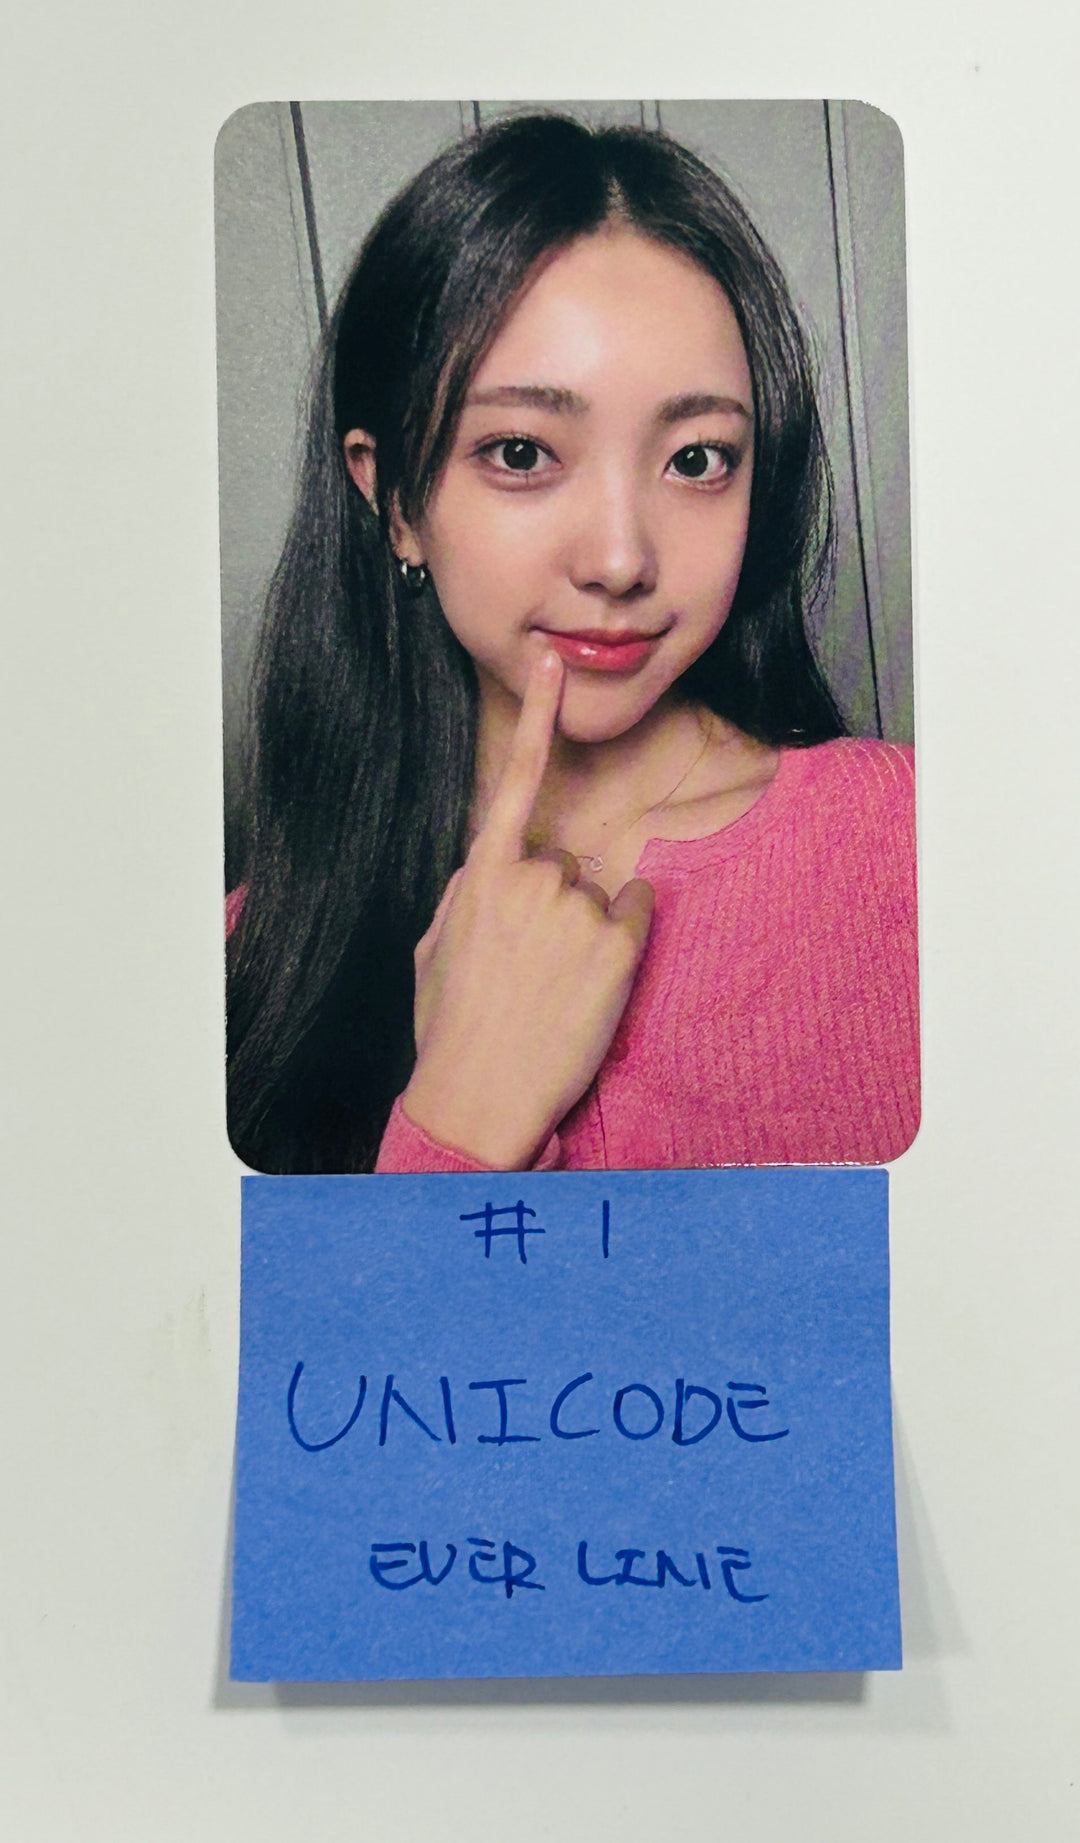 UNICODE "Hello World : Code J" - Everline Fansign Event Photocard [24.5.16]